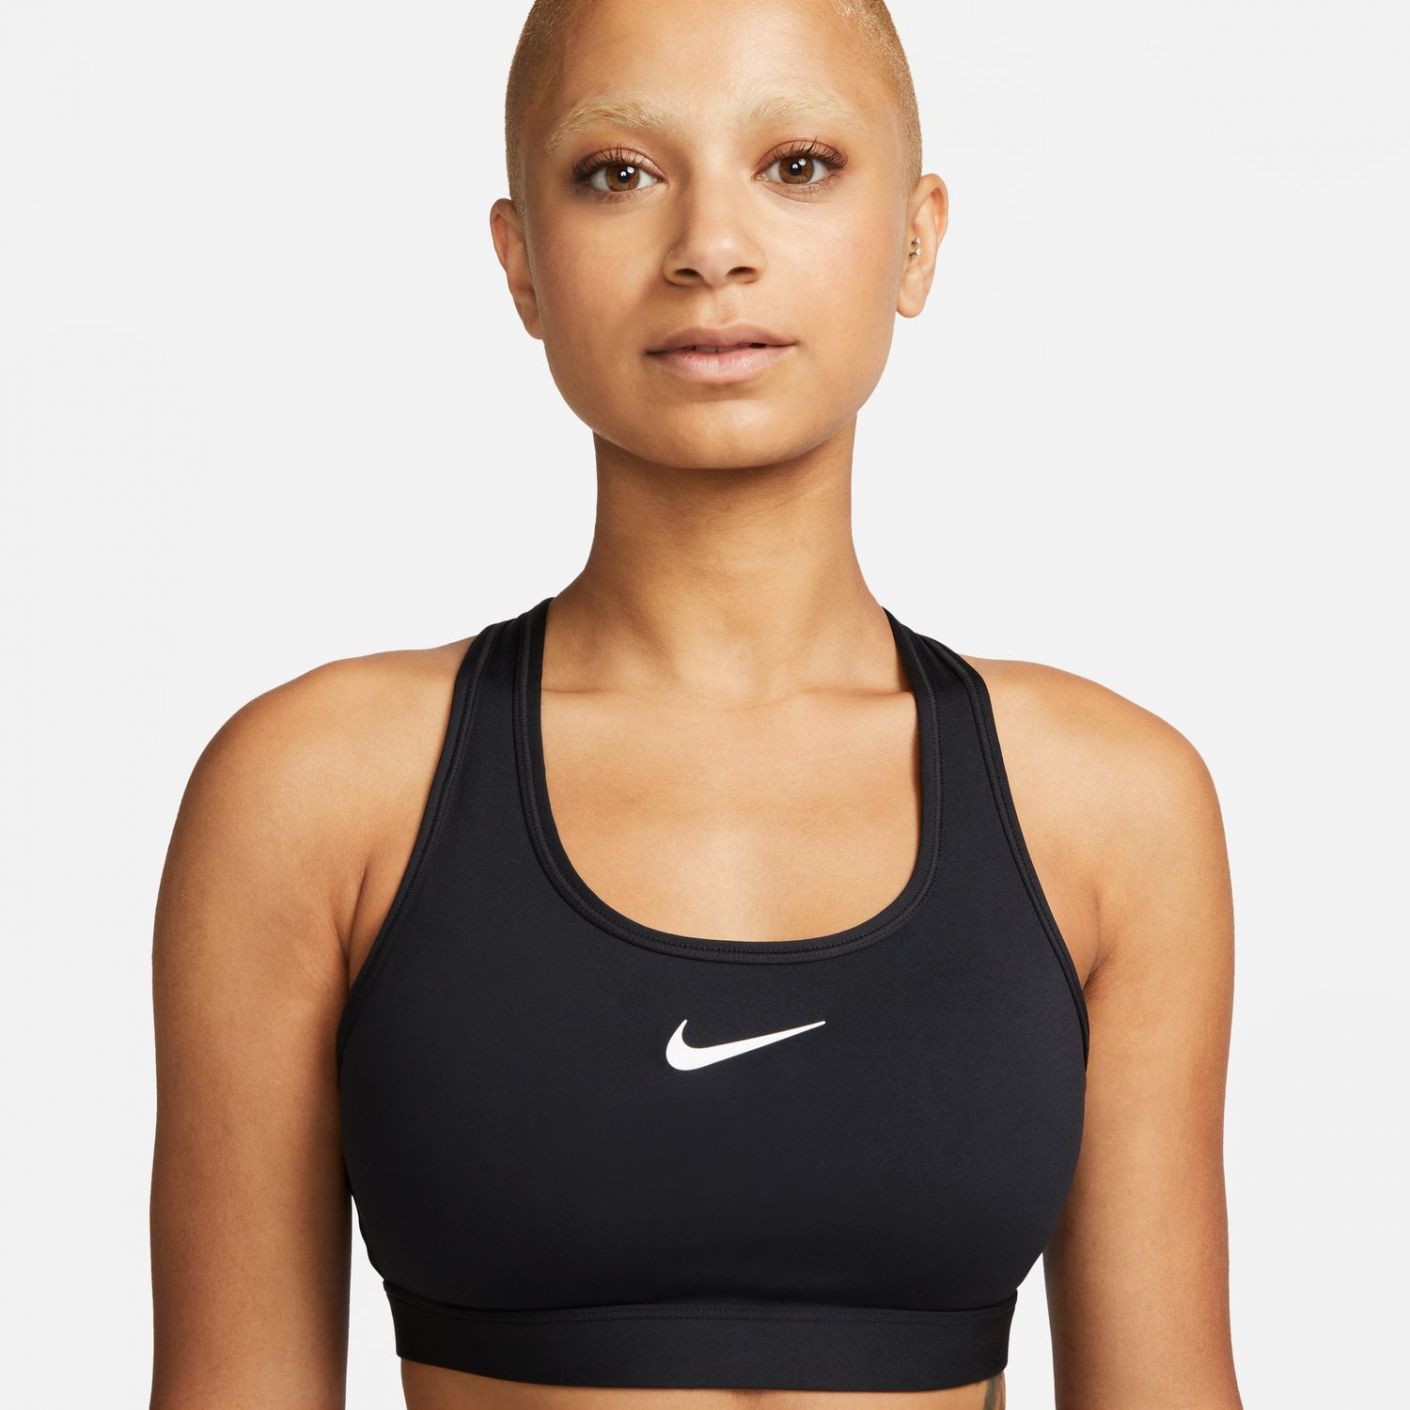 Nike Sports Bra Swoosh Medium Support Black/White